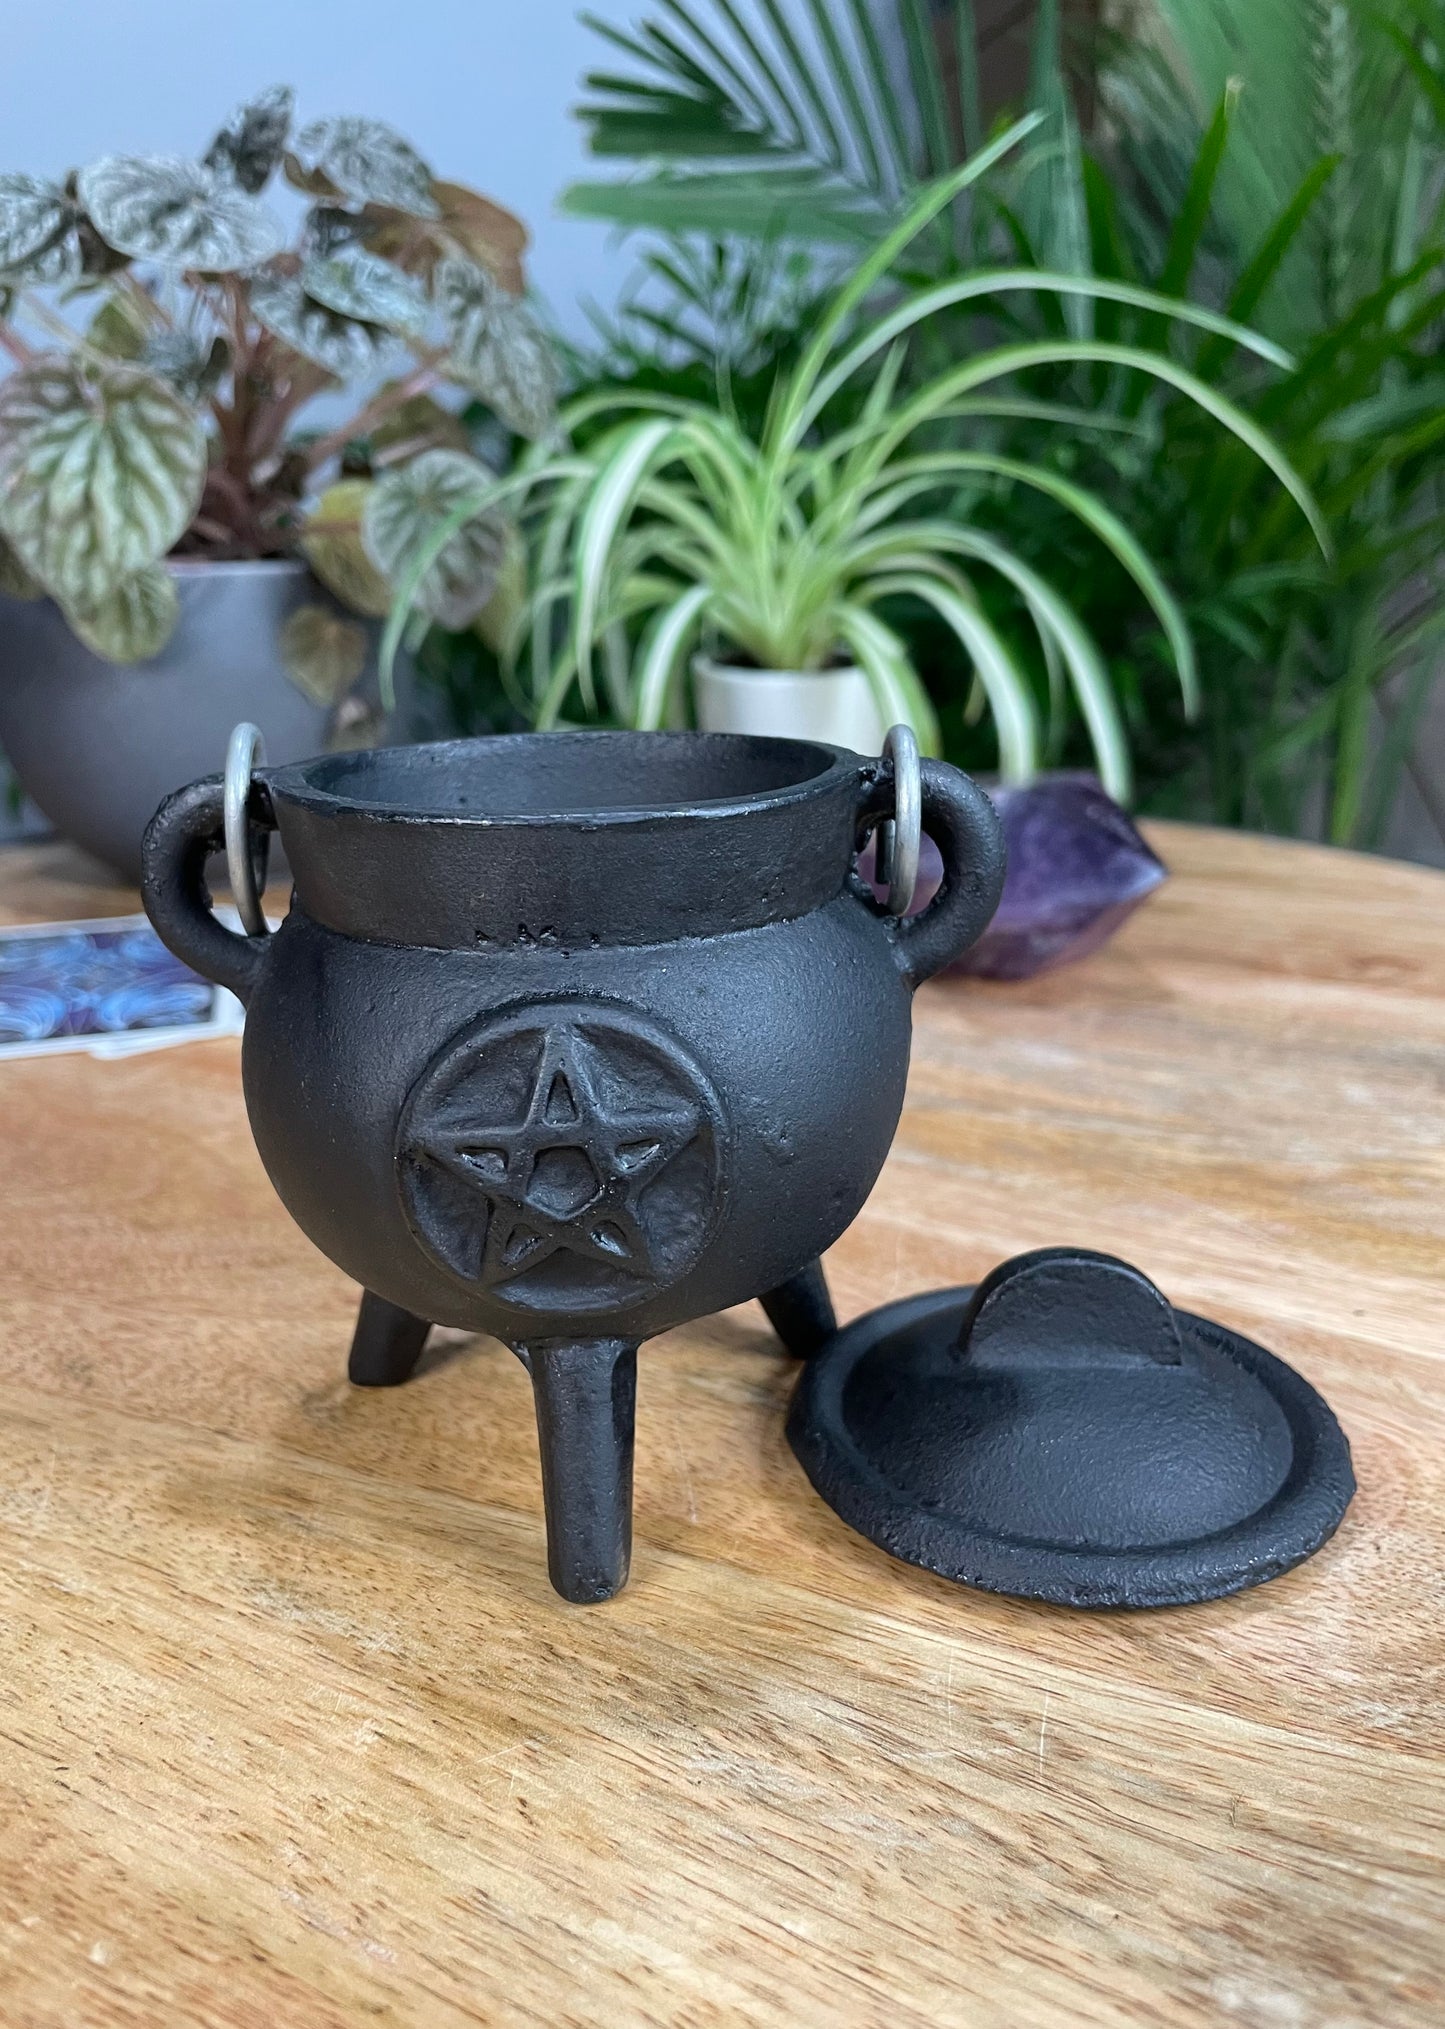 Pictured is a mini pentacle cast iron cauldron.